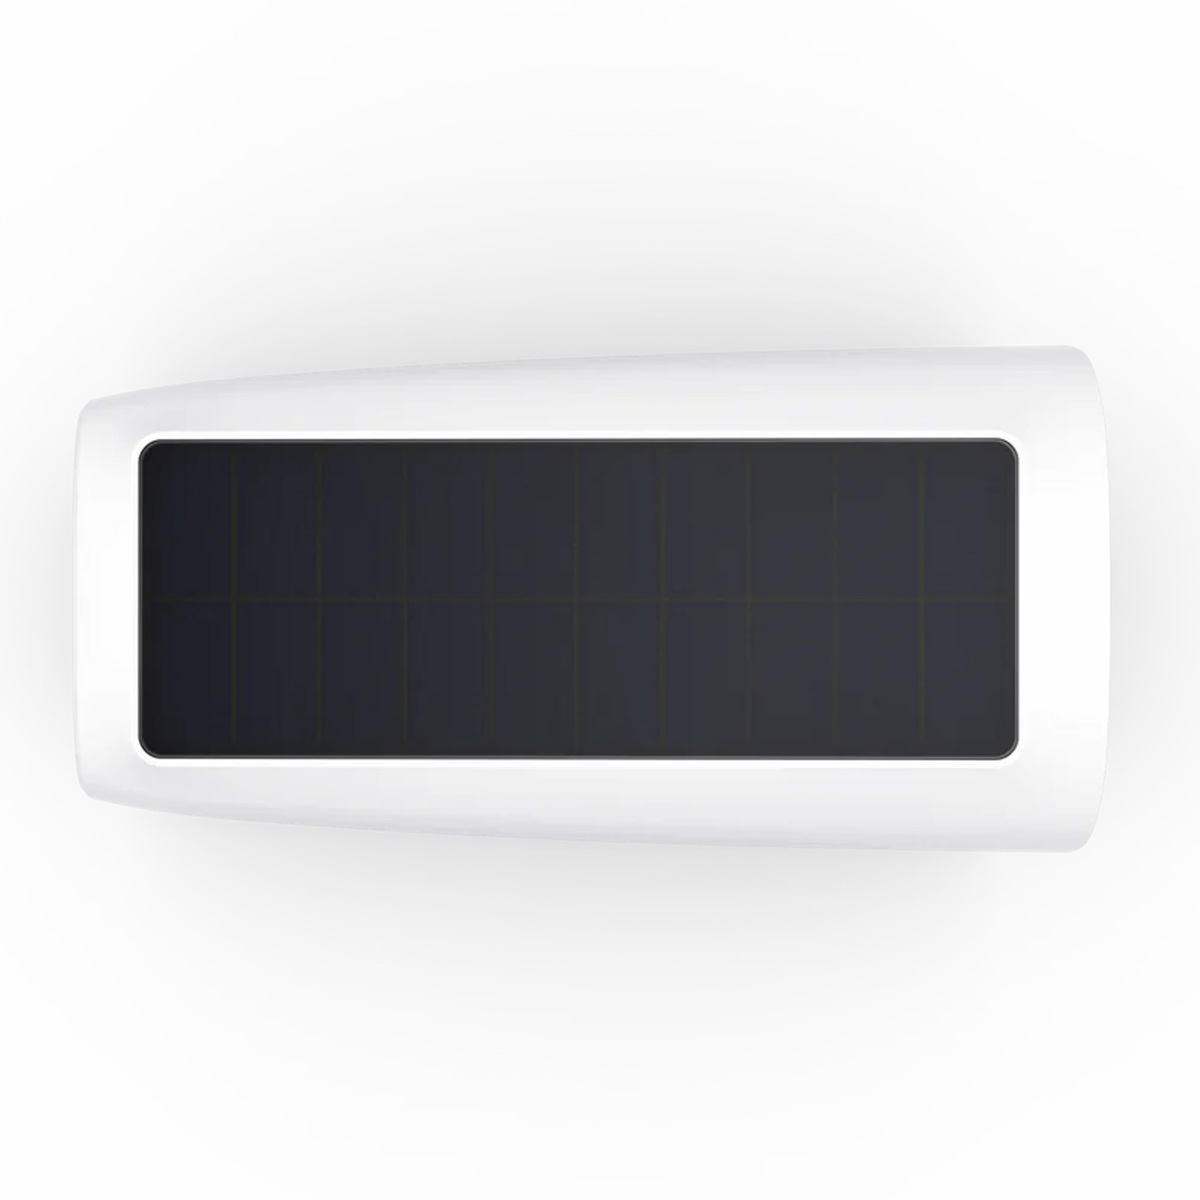 Eufy Cam3 Add-On Camera, Black/White, T81603W1